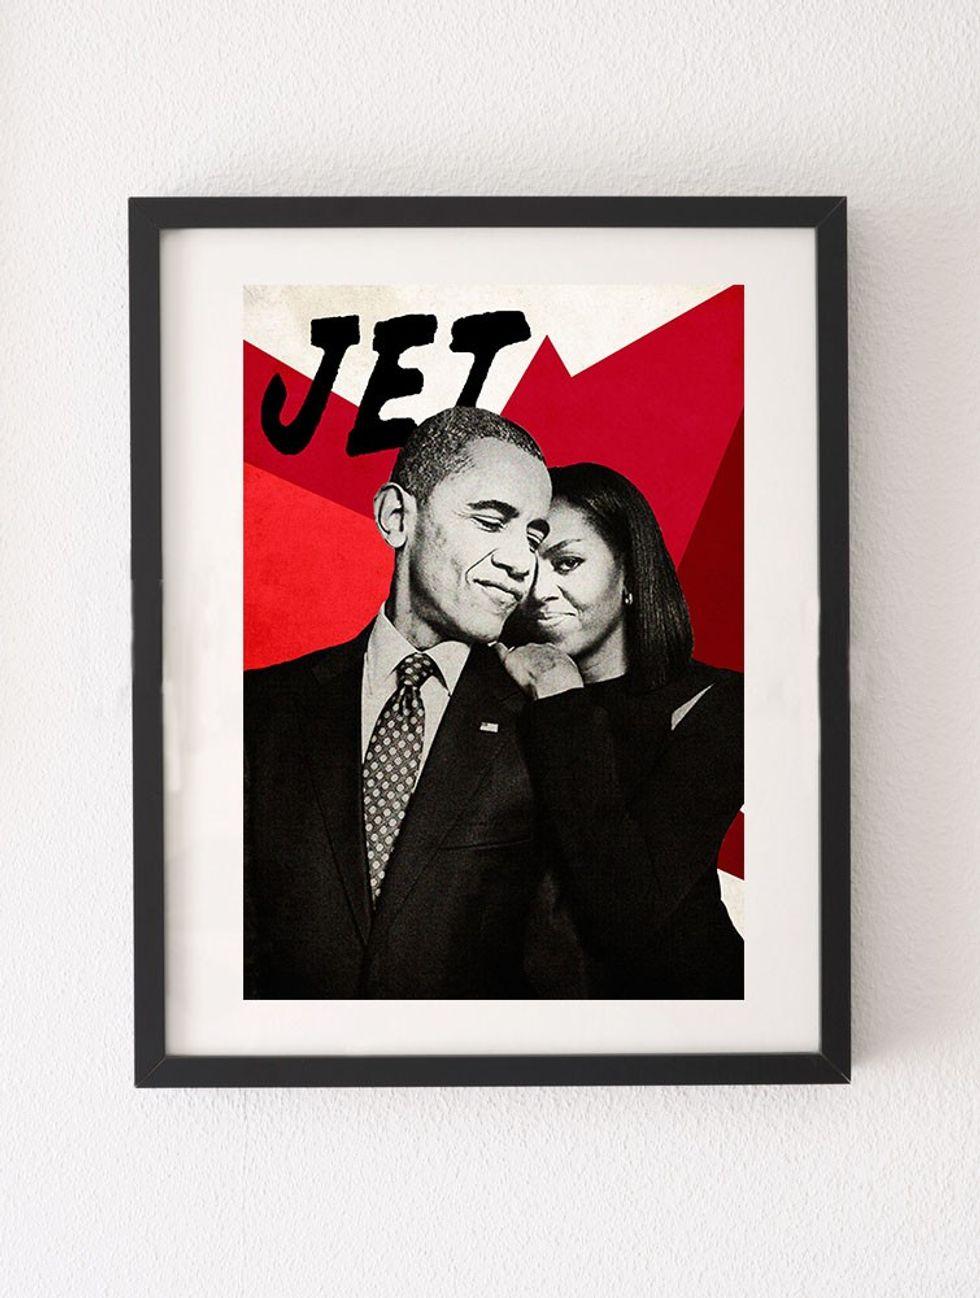 Barack and Michelle Obama Jet Magazine cover